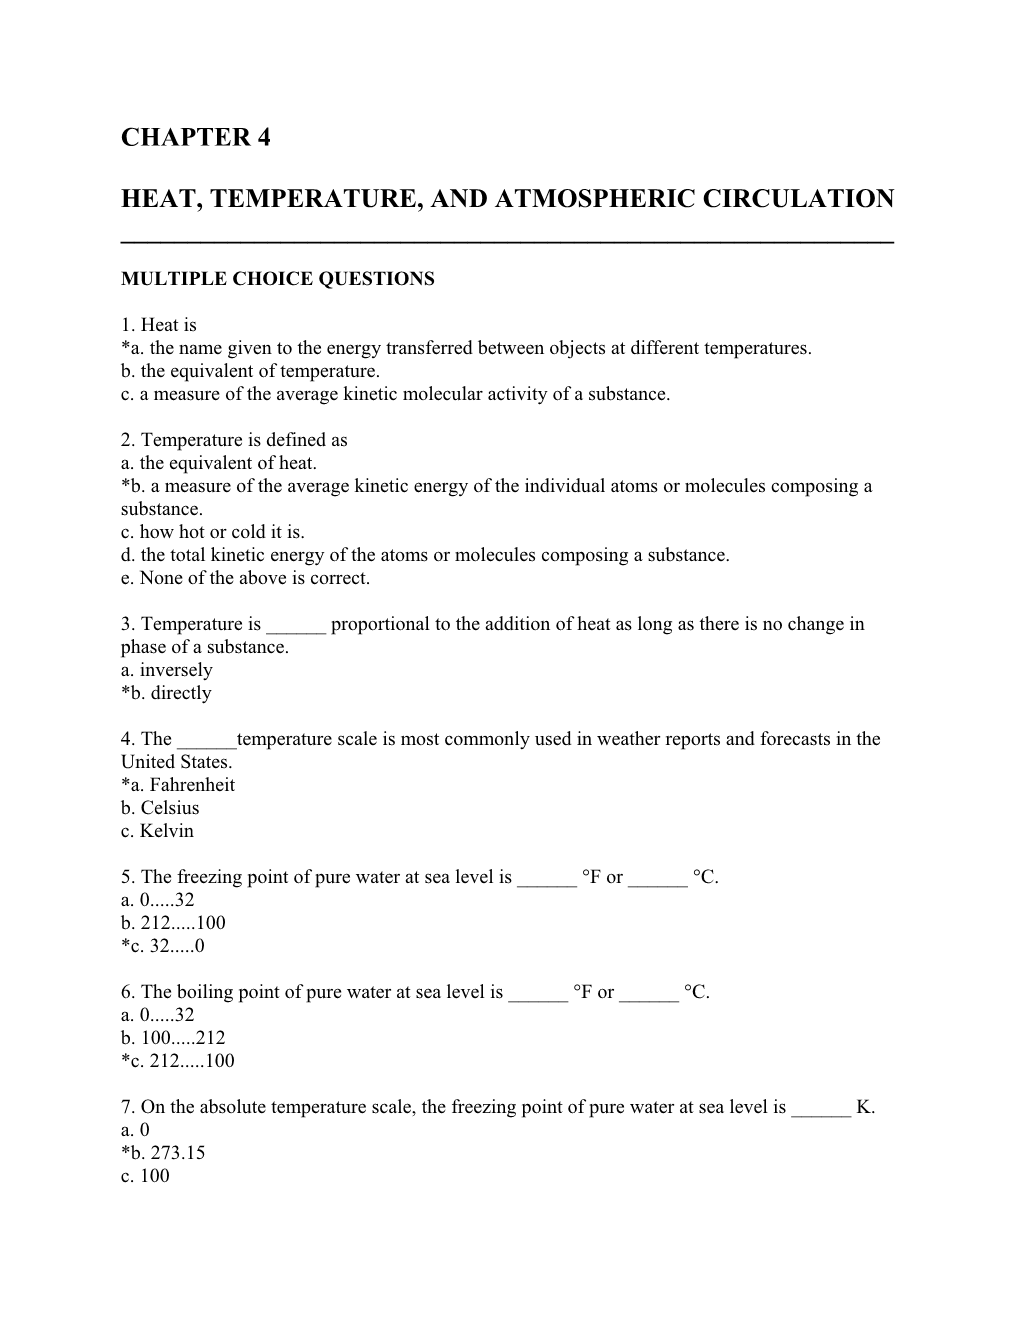 Heat, Temperature, and Atmospheric Circulation